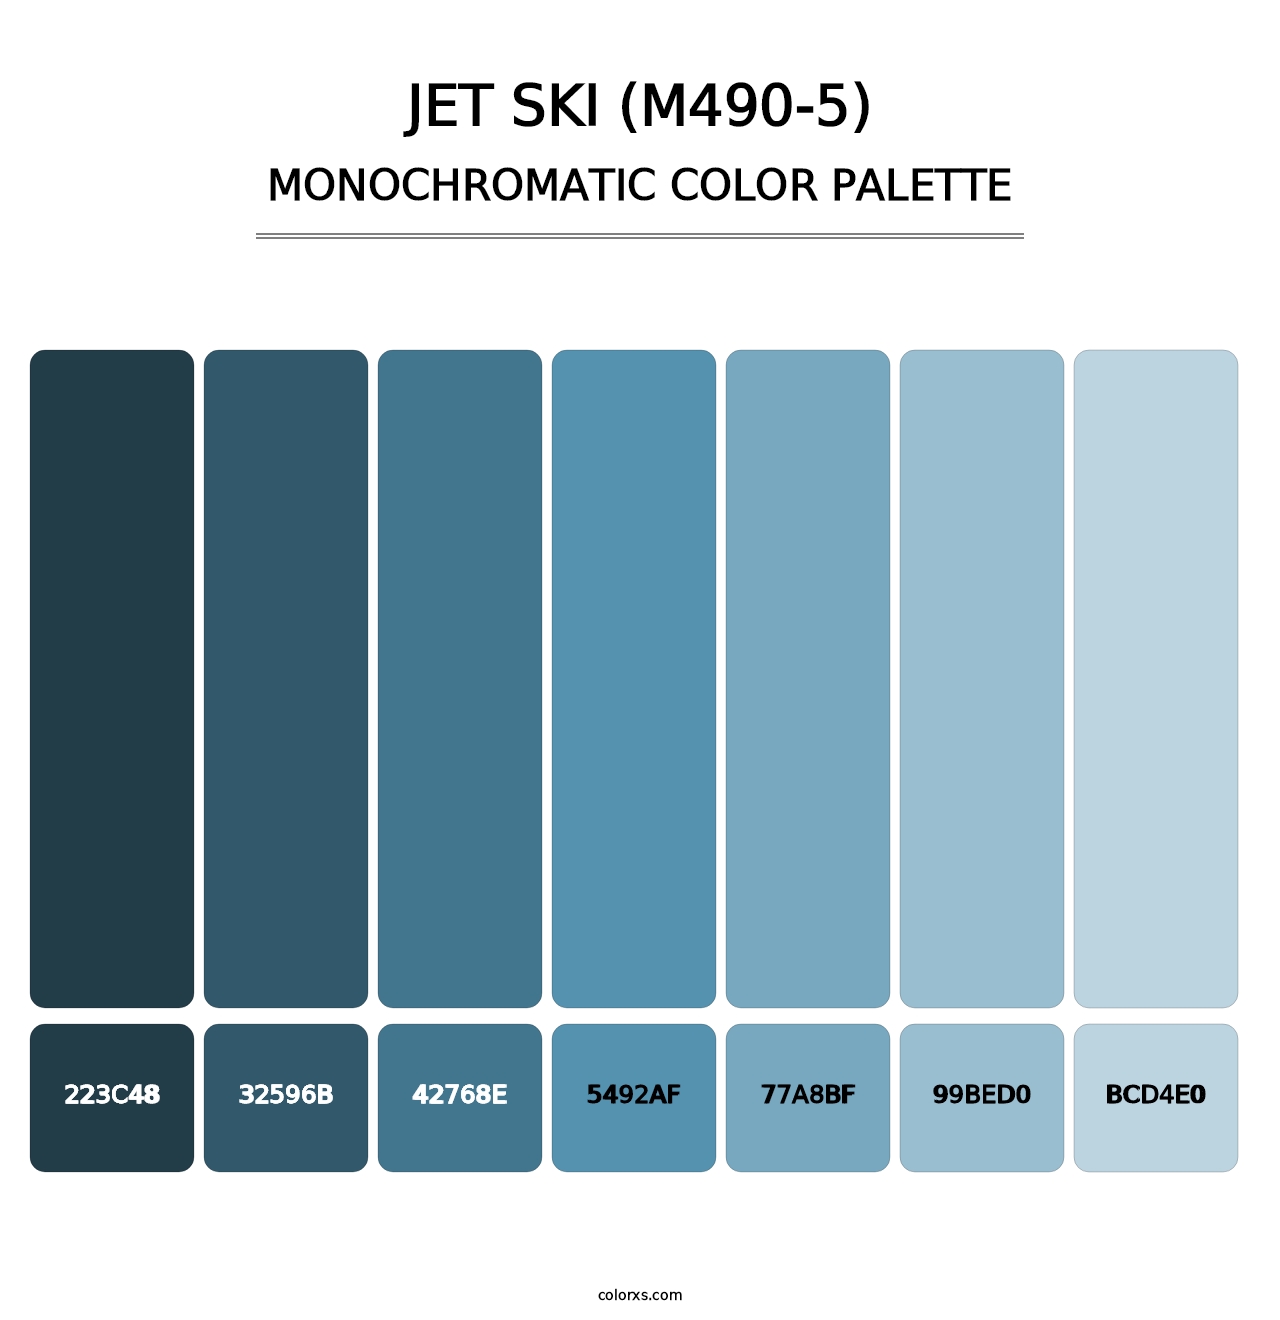 Jet Ski (M490-5) - Monochromatic Color Palette